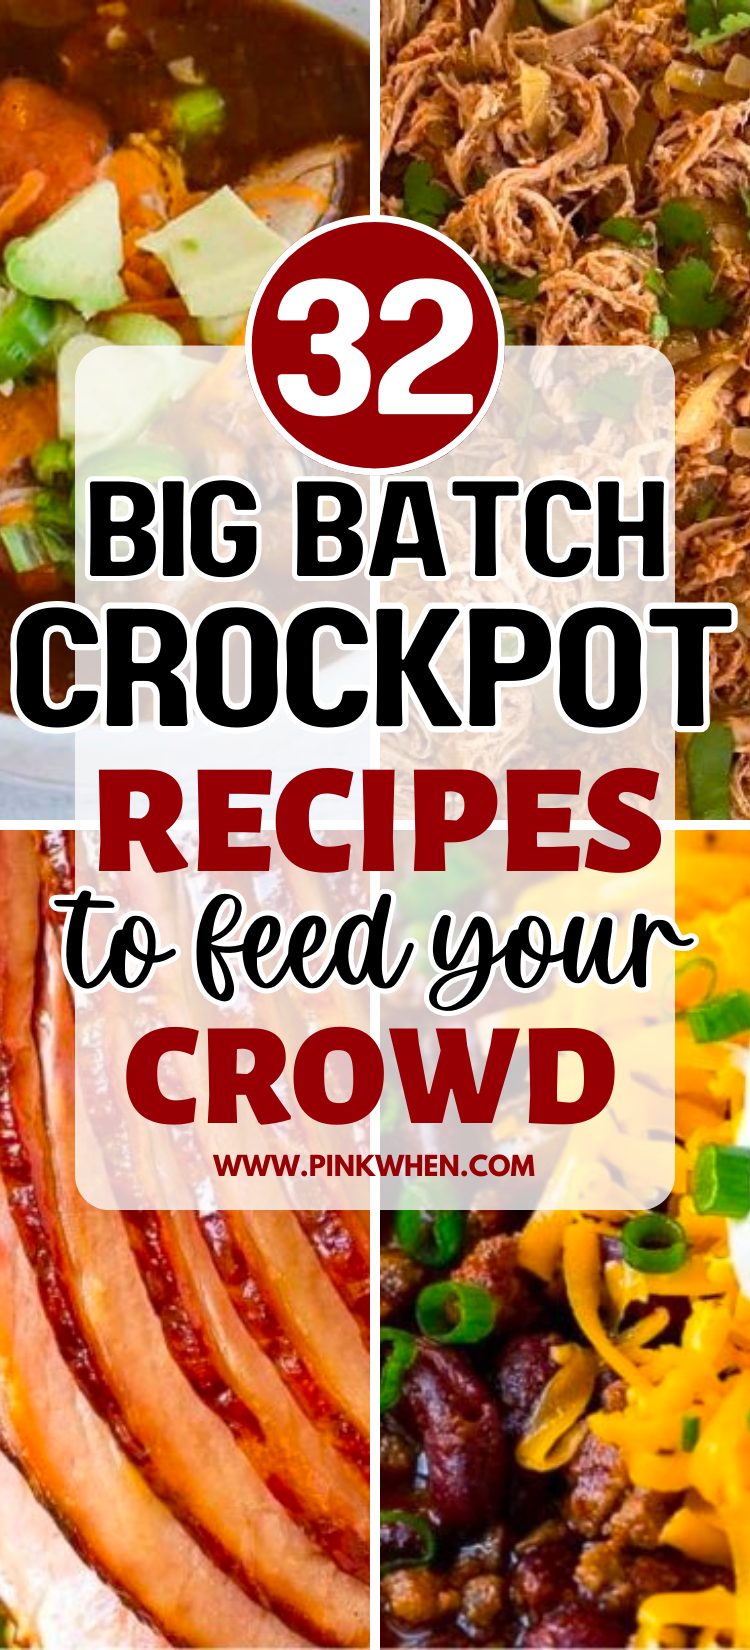 Big Batch Crockpot Recipes to Feed Your Crowd